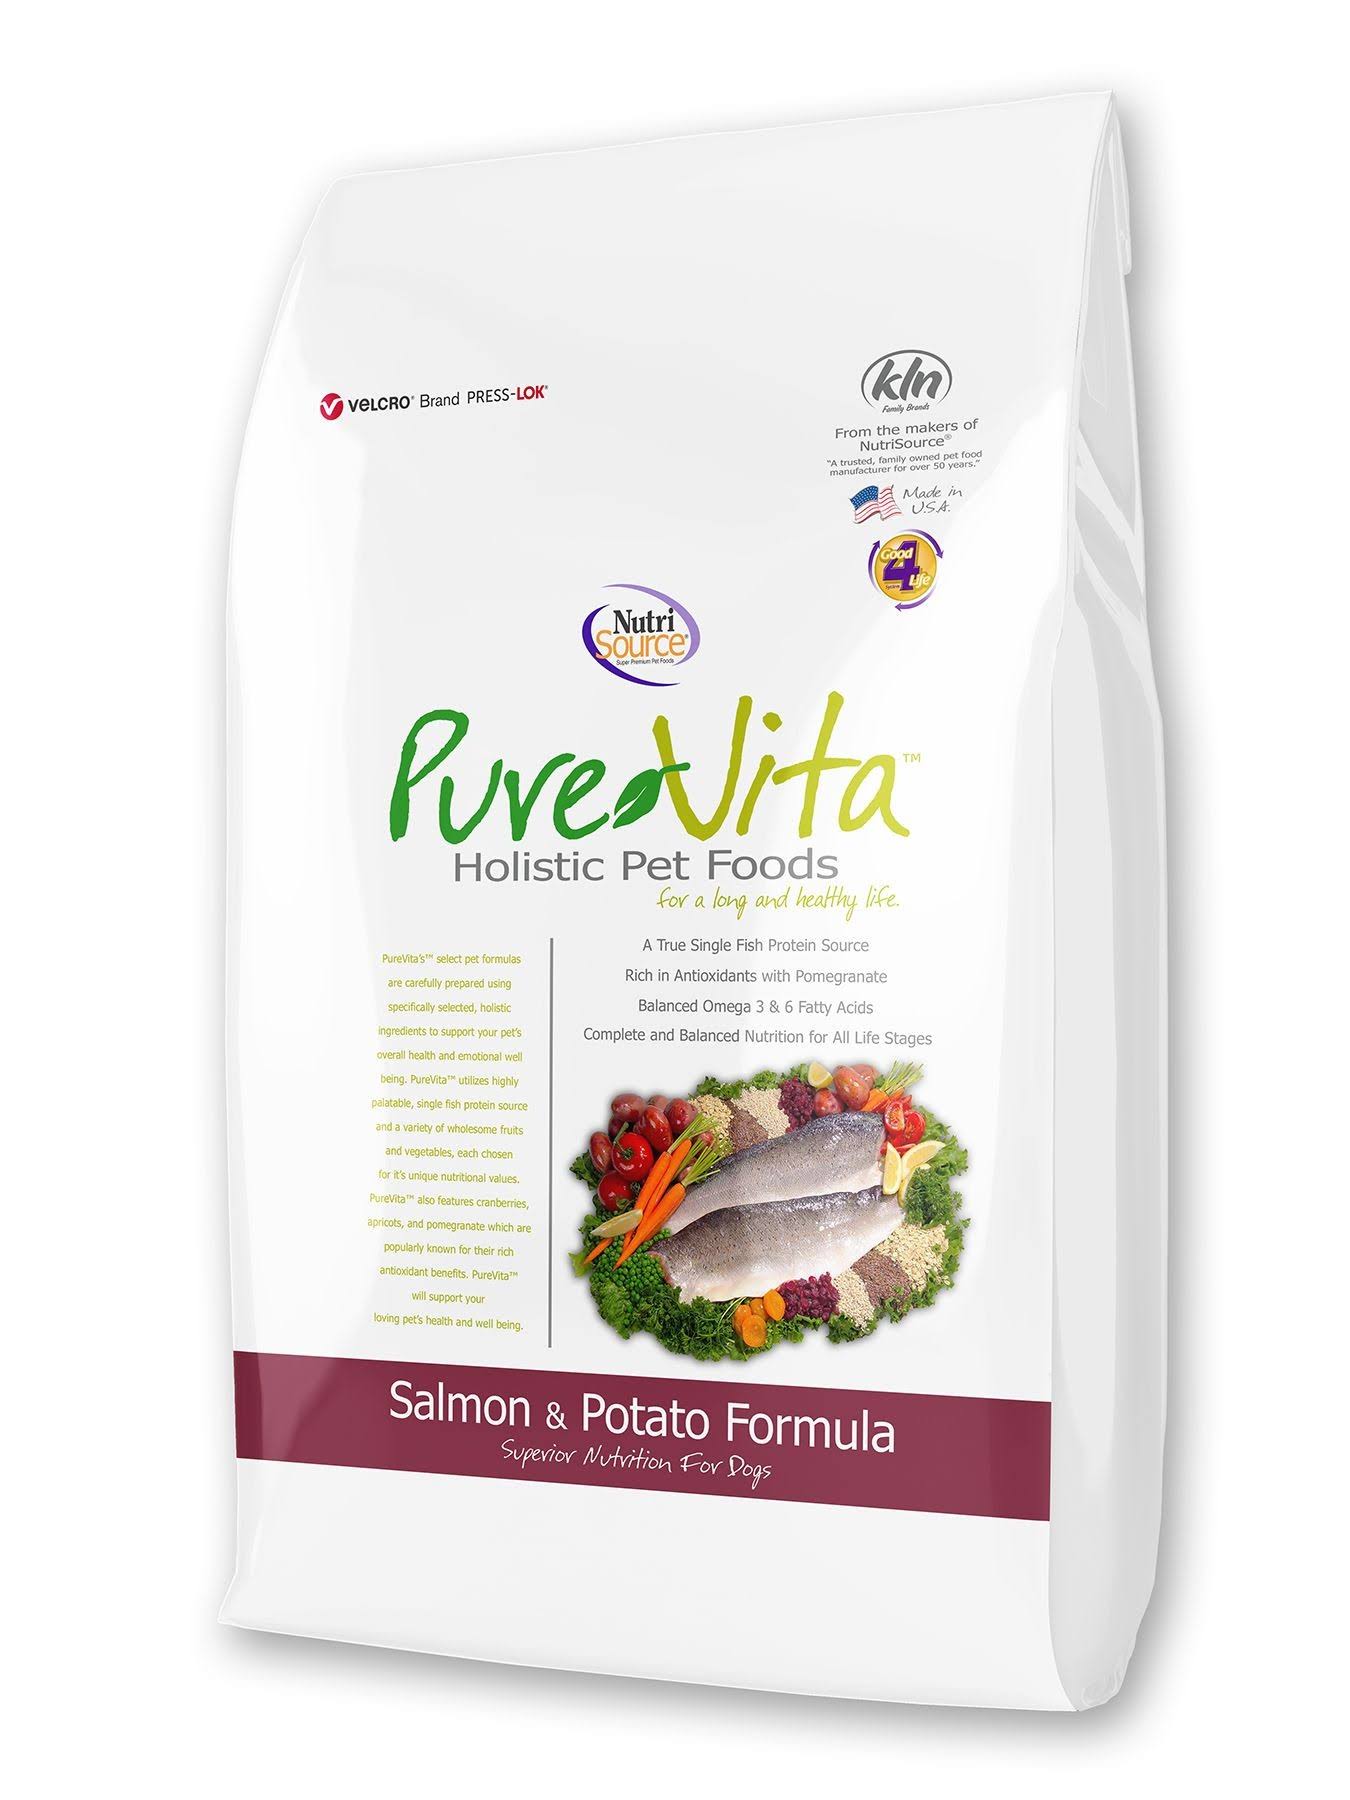 PureVita Nutri Source Salmon and Potato Formula Dry Dog Food - 5lb